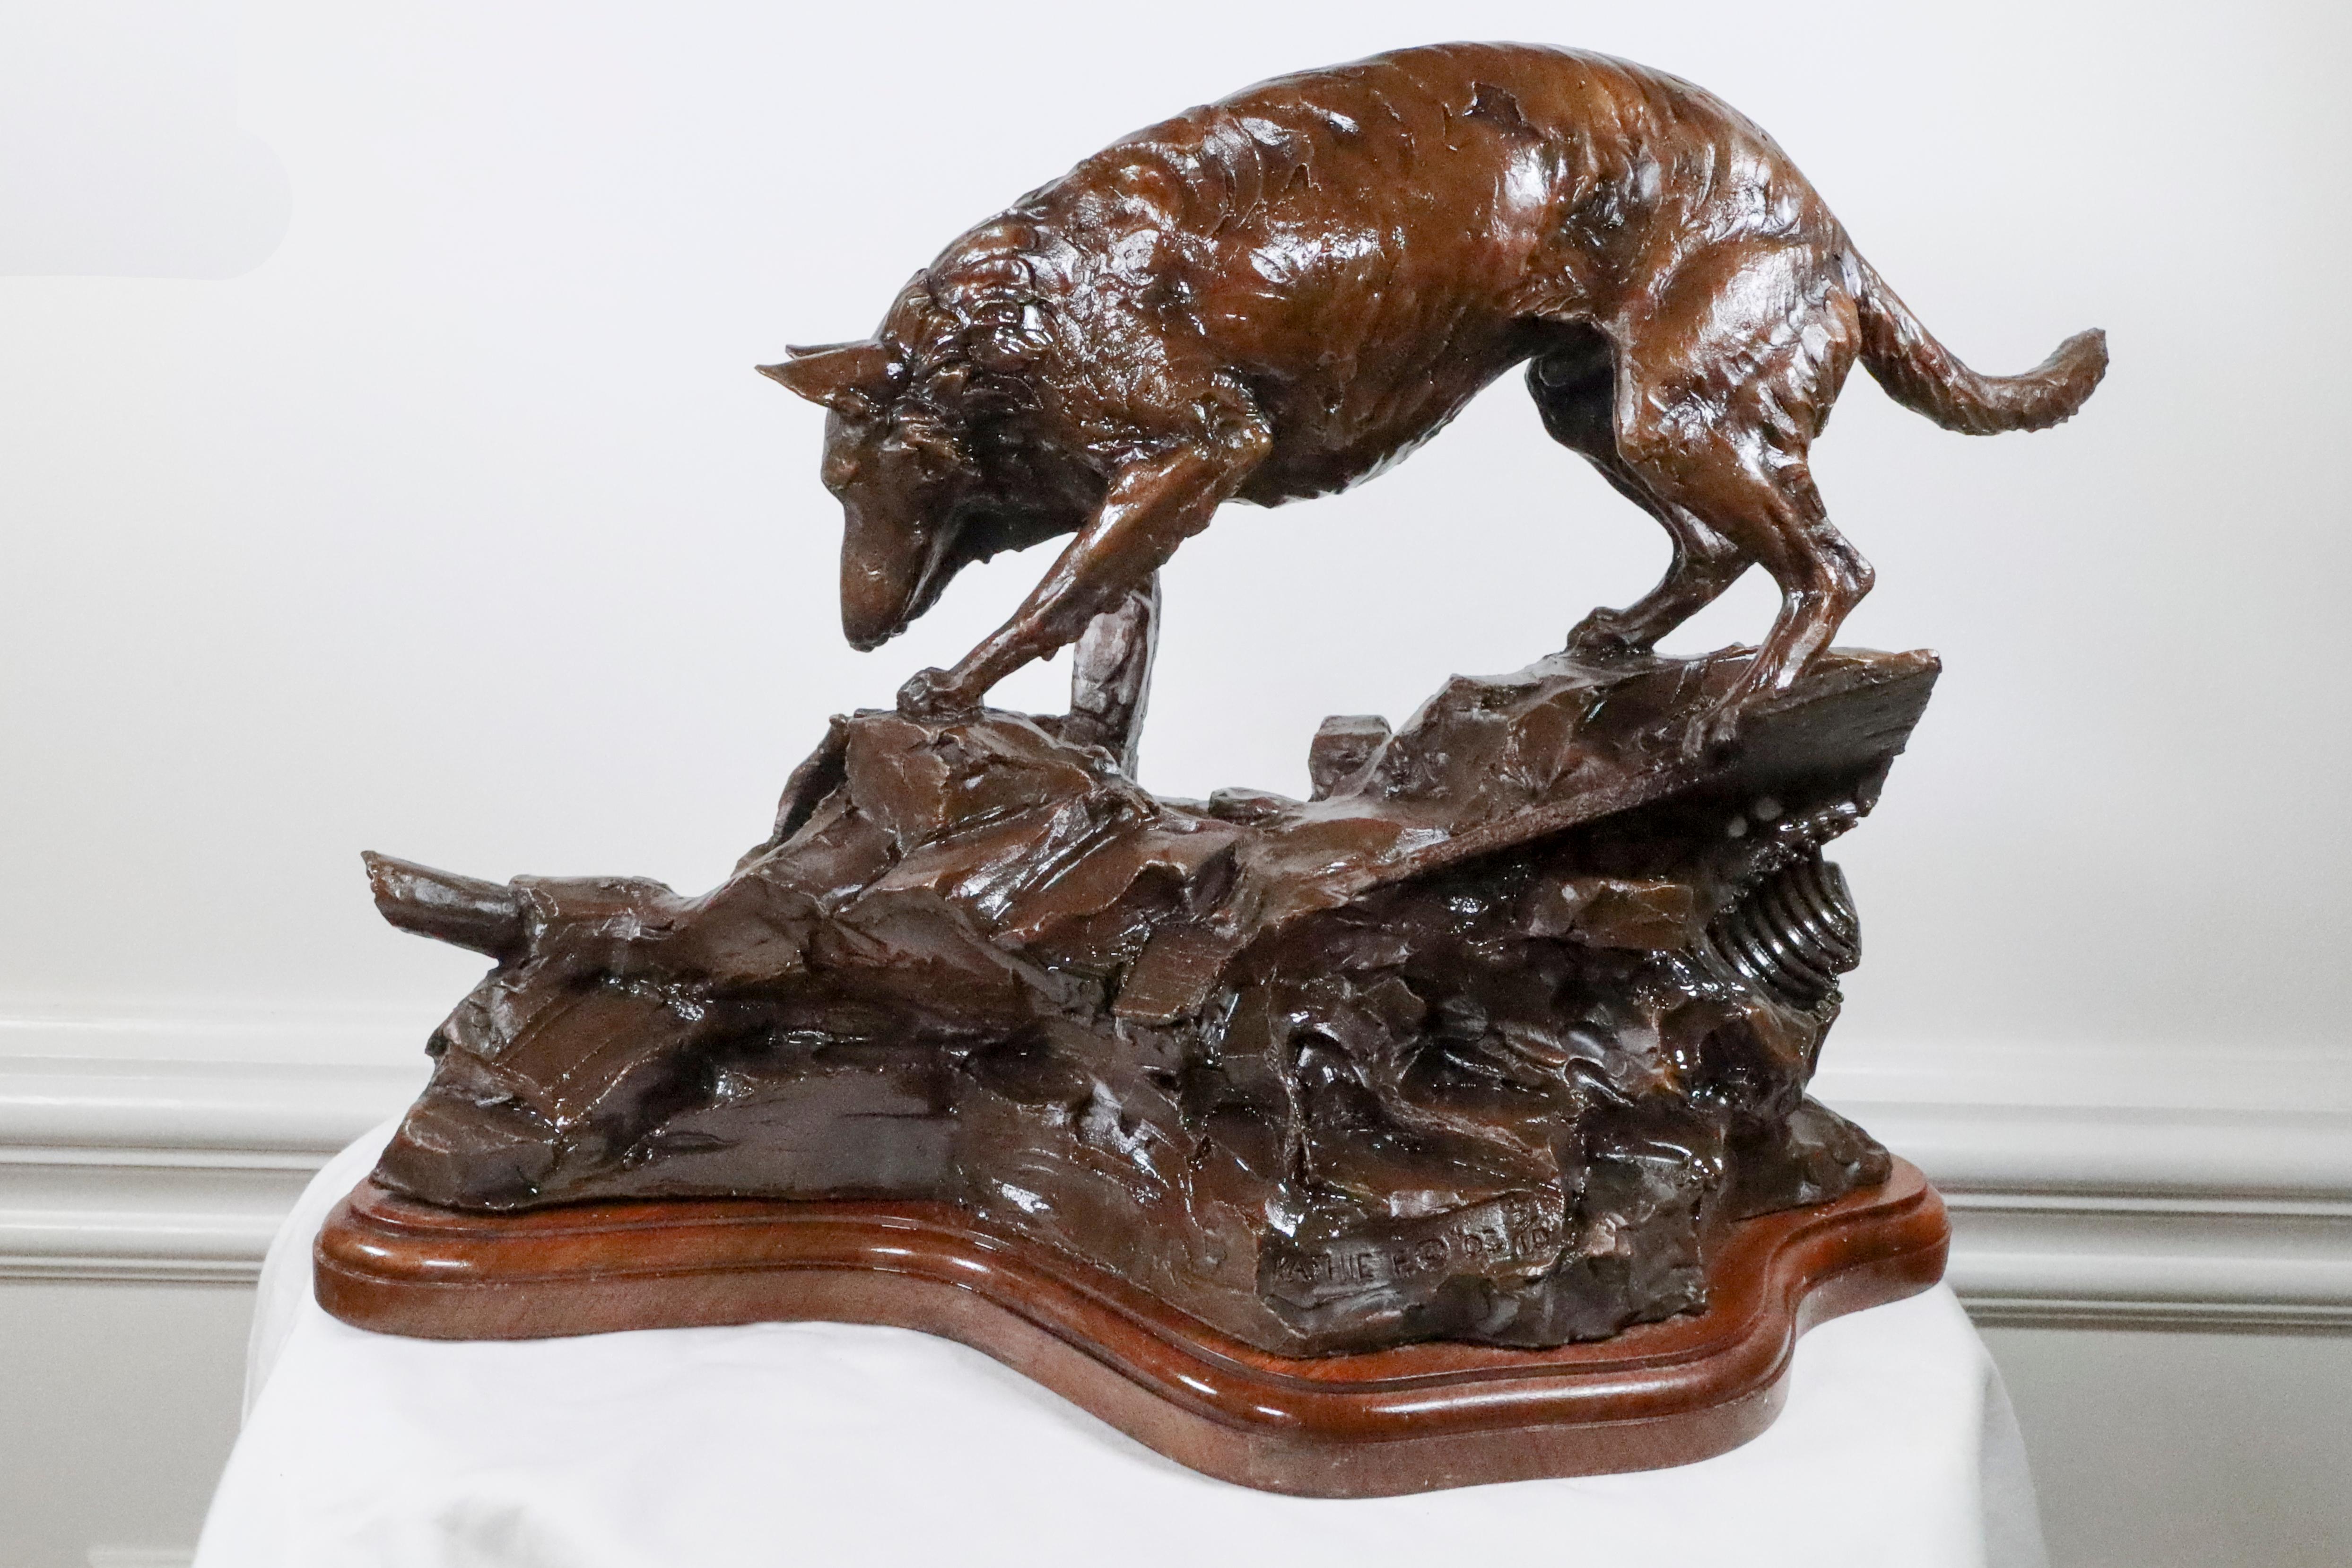  Kathleen Friedenberg Figurative Sculpture - "Ground Zero" Bronze German Shepherd Dog Searching for Survivors 